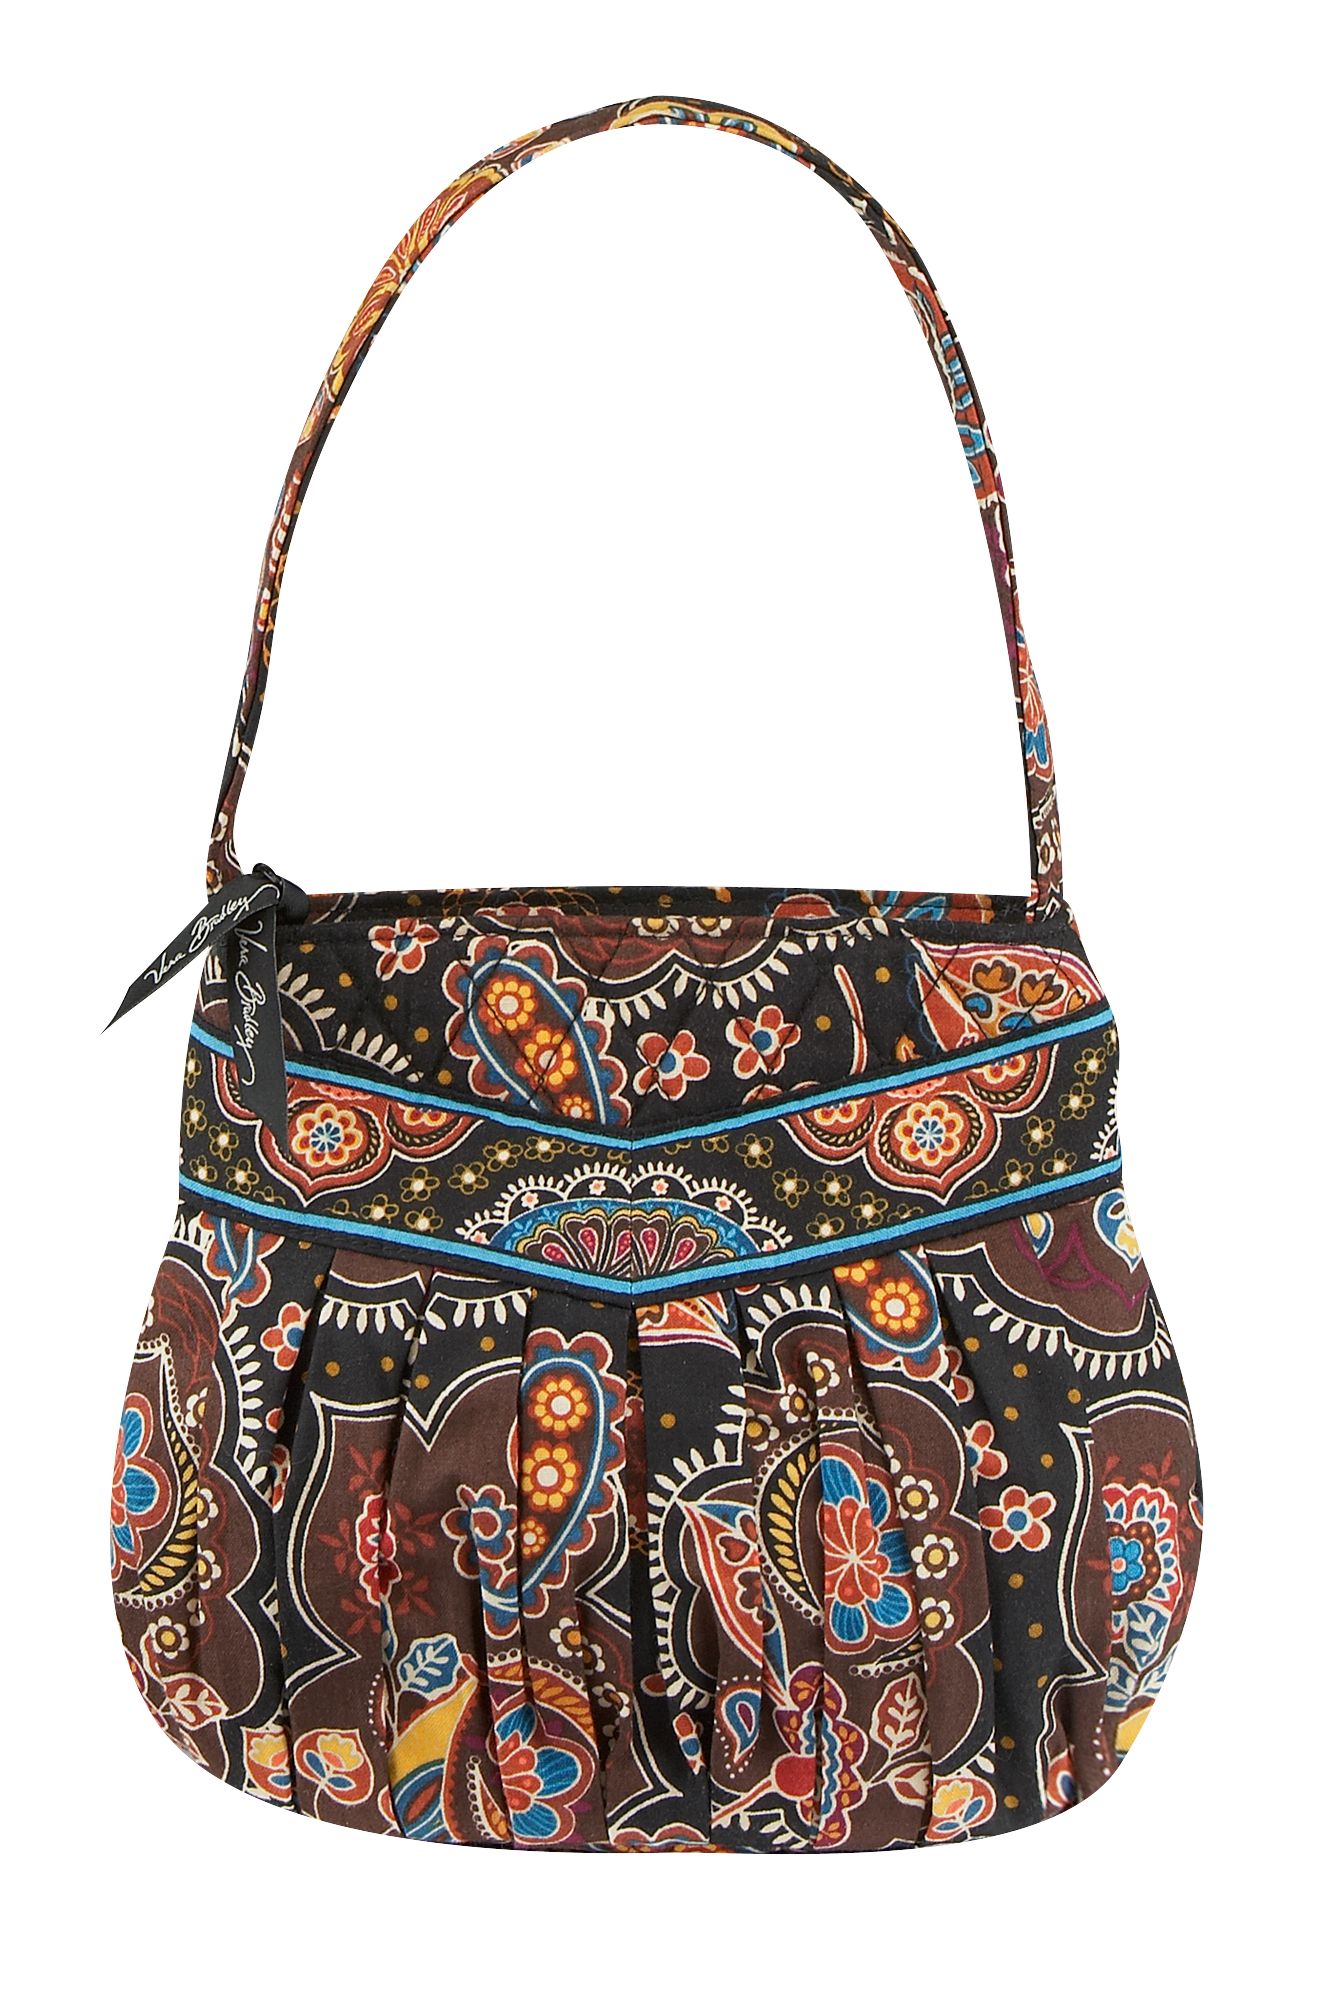 NEW Vera Bradley HANNAH Handbag Brown Tan Small Purse | eBay